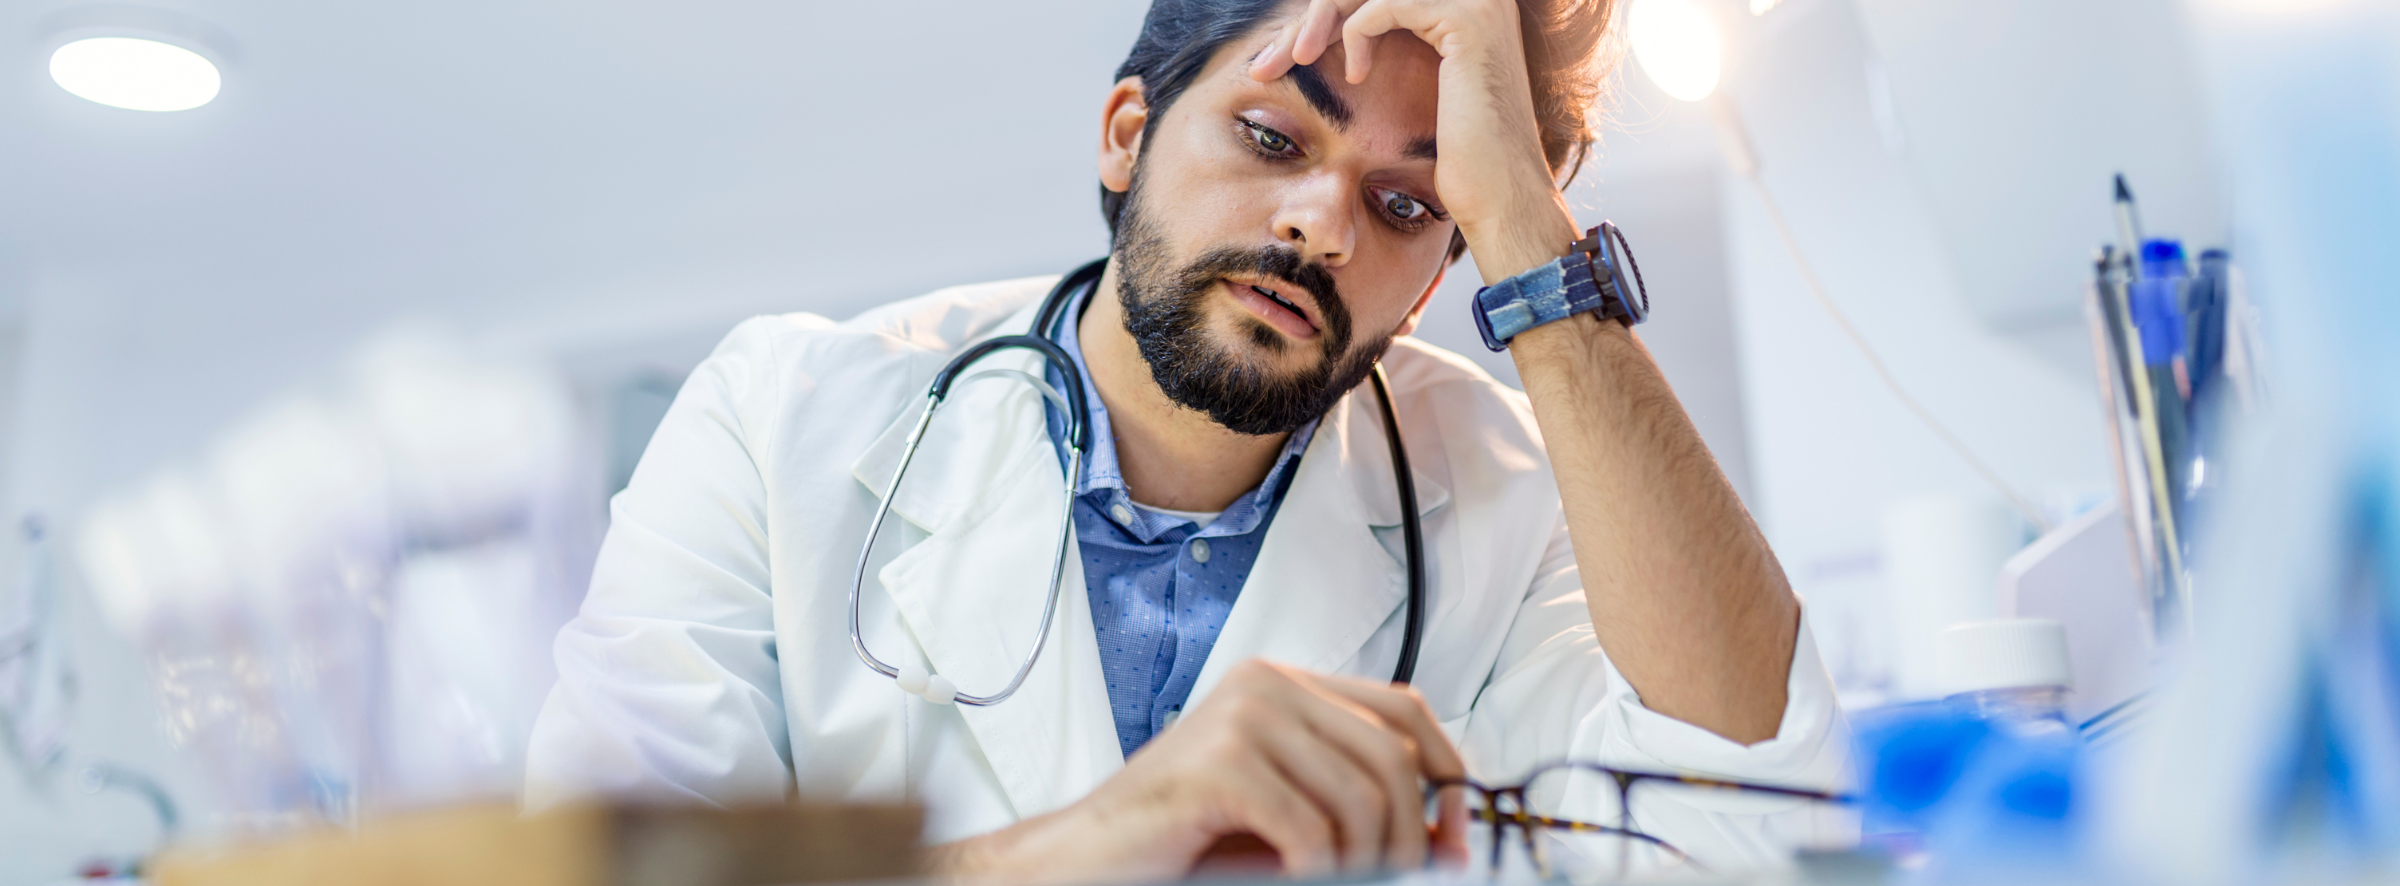 5 Symptoms of Physician Burnout to Beware